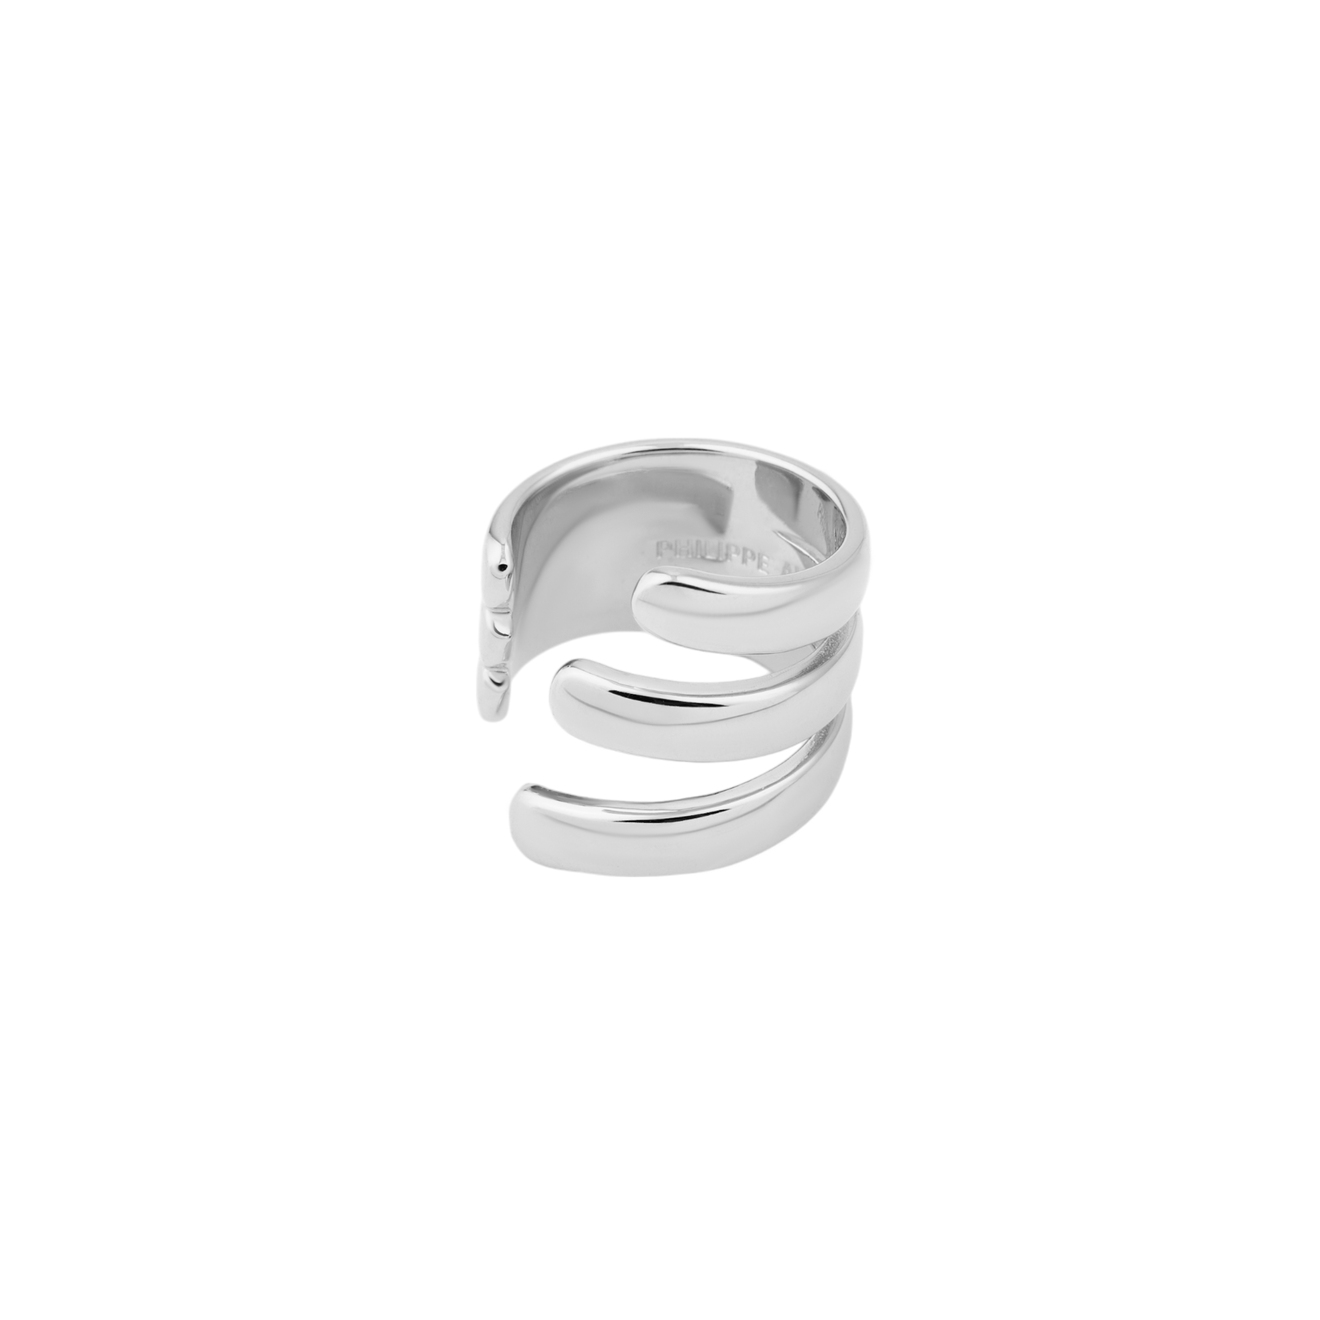 Philippe Audibert Кольцо Assya с серебряным покрытием philippe audibert кольцо neal с серебряным покрытием с синей эмалью